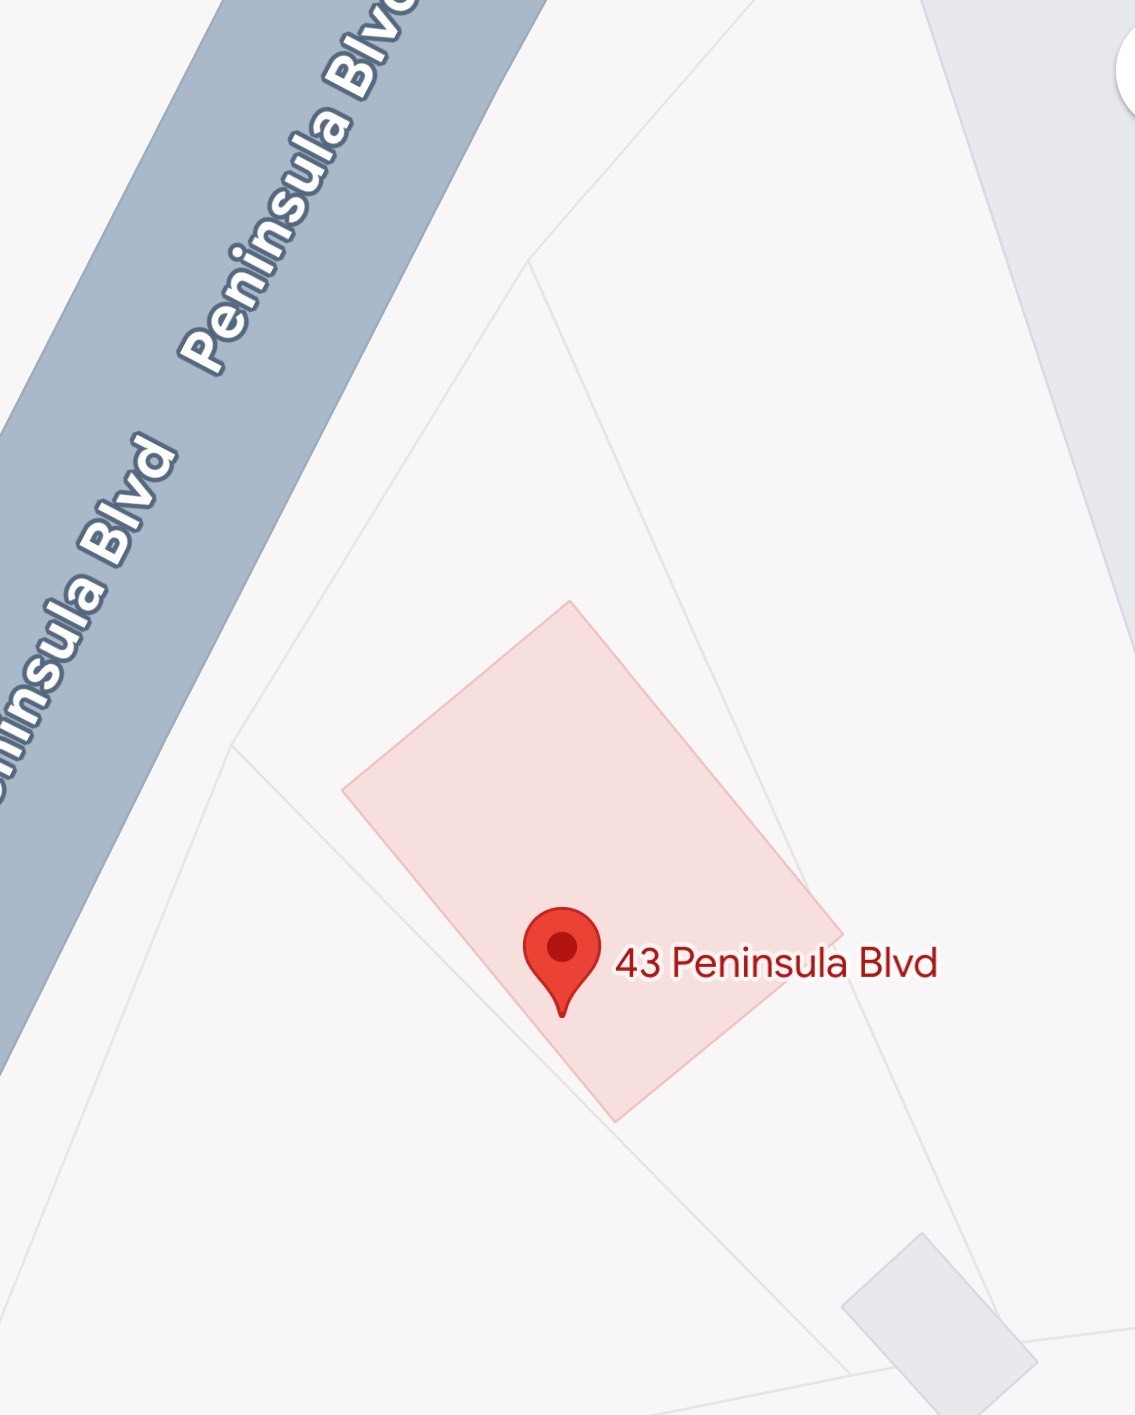 2. 43 Peninsula Blvd